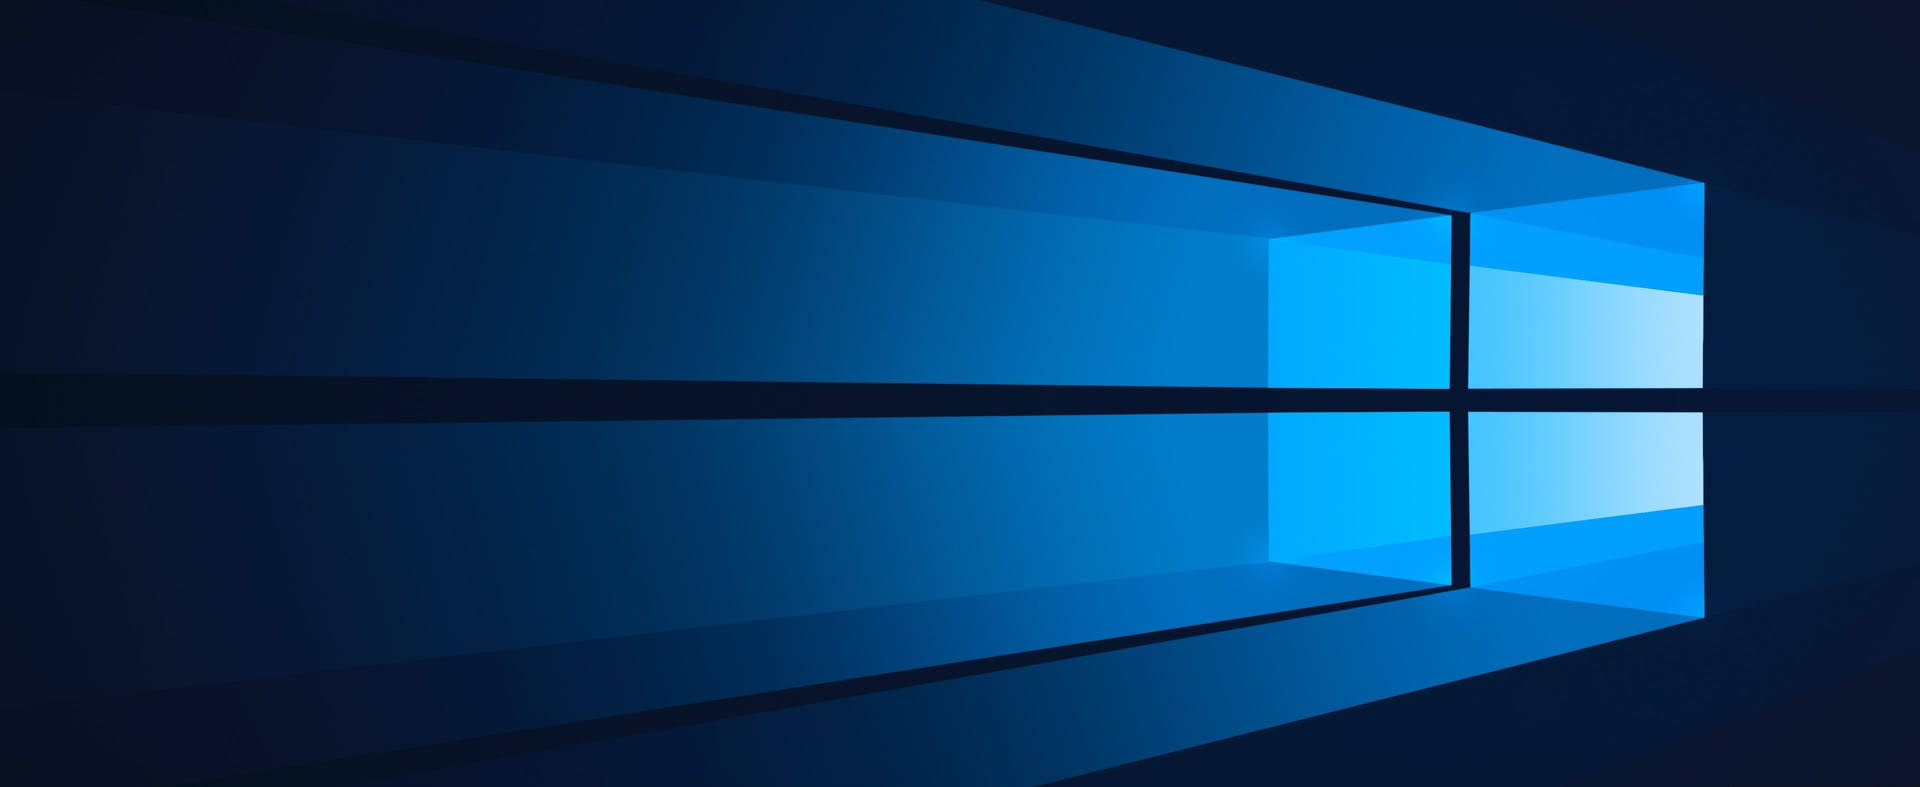 Windows 10-logo med blå lys effekt Wallpaper